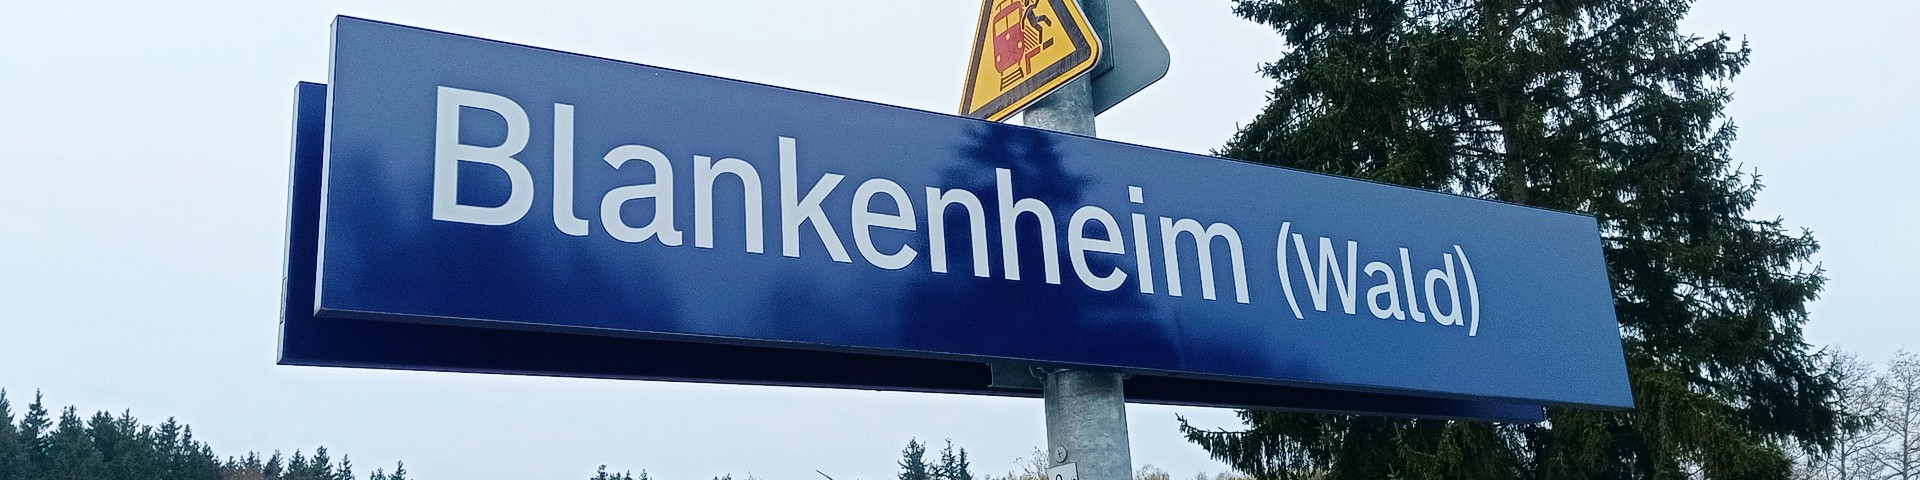 Freifunk-Installation am Bahnhof Blankenheim-Wald